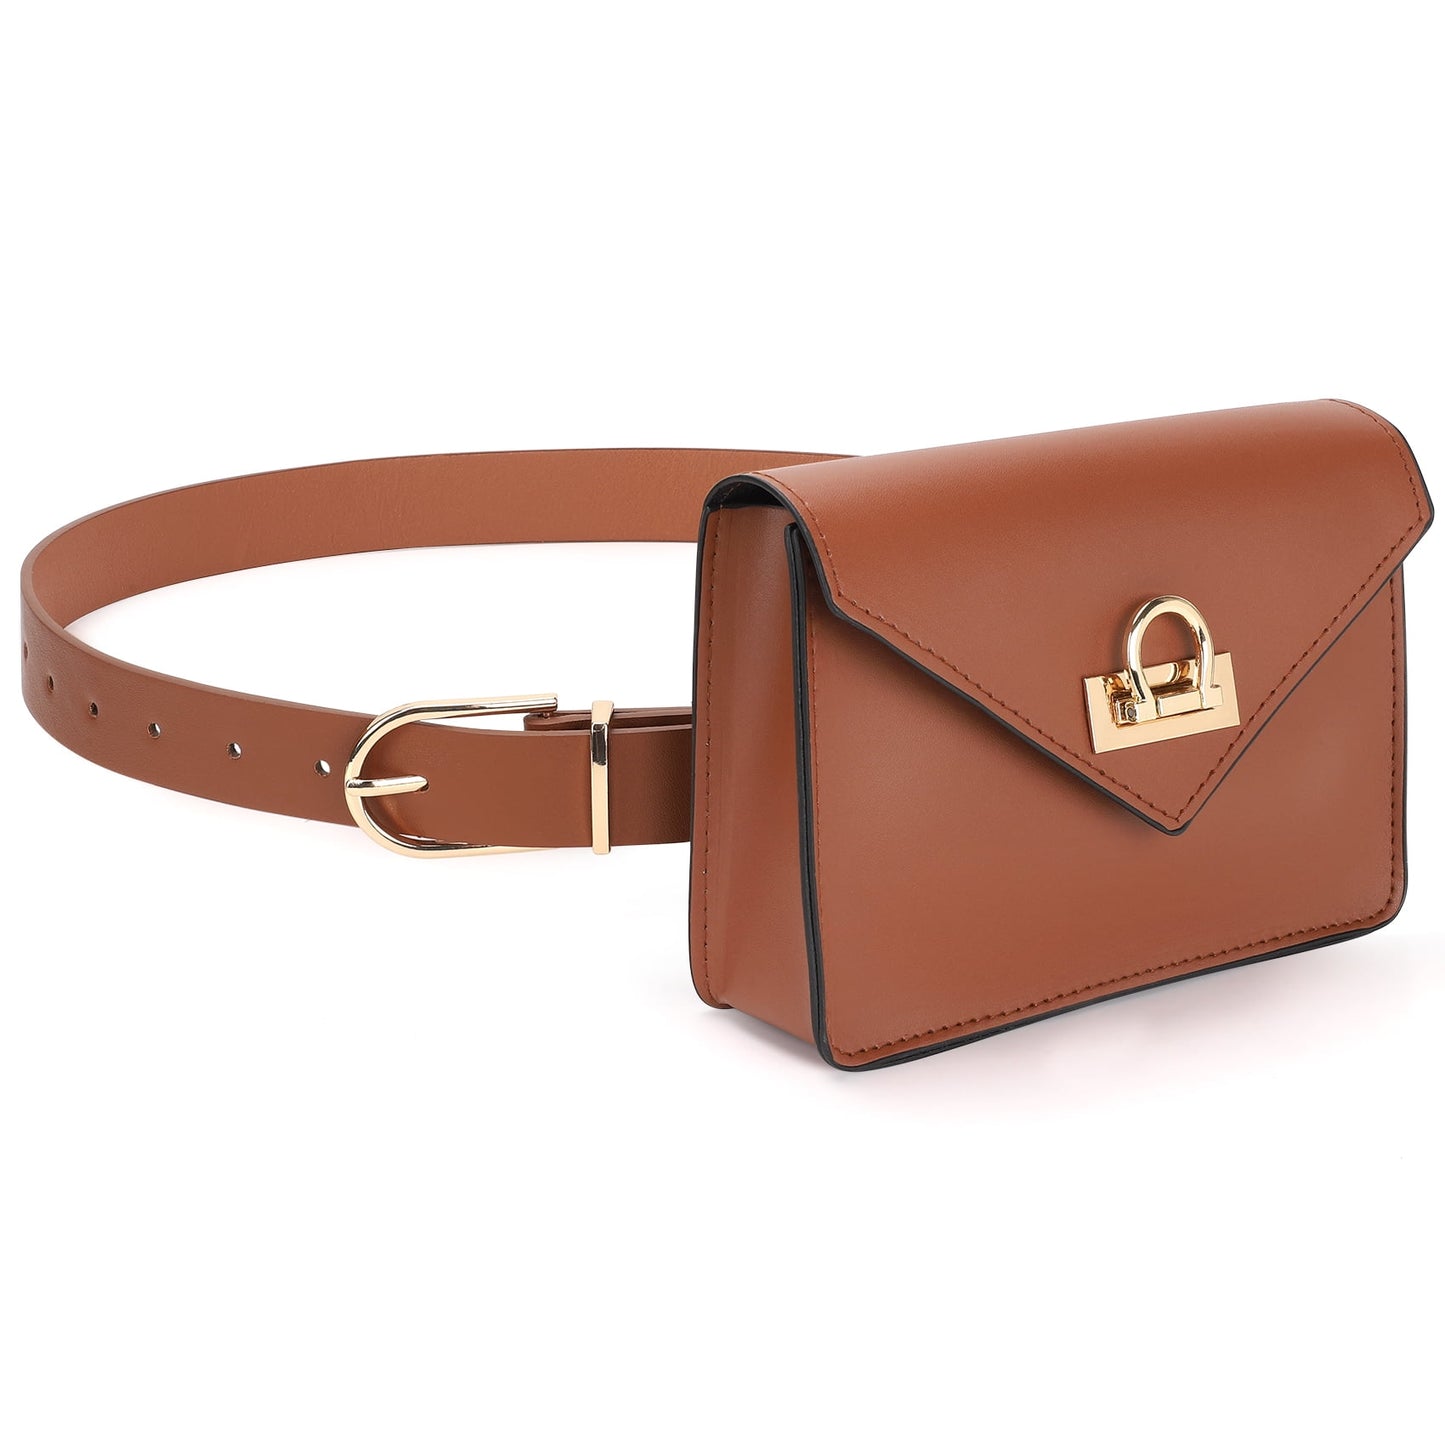 SUOSDEY Women's PU Leather Waist Belt Fanny Pack Waist Bag with Removable Belt Bag